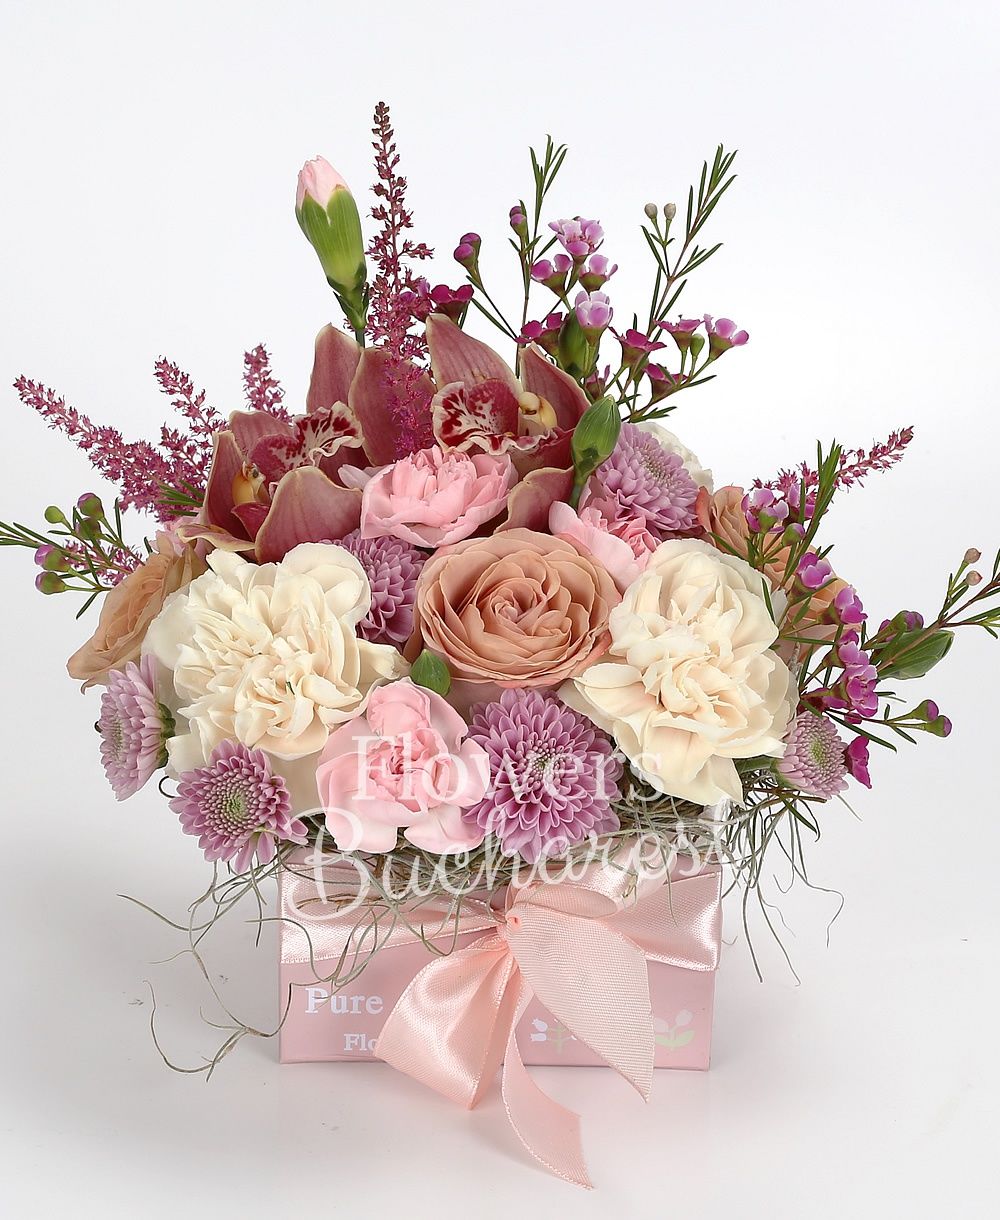 3 cappuccino roses, 3 cream carnations, 3 pink carnations, 3 purple santini, 1 pink waxflower, 3 red astilbe, garnet cymbidium, greenery